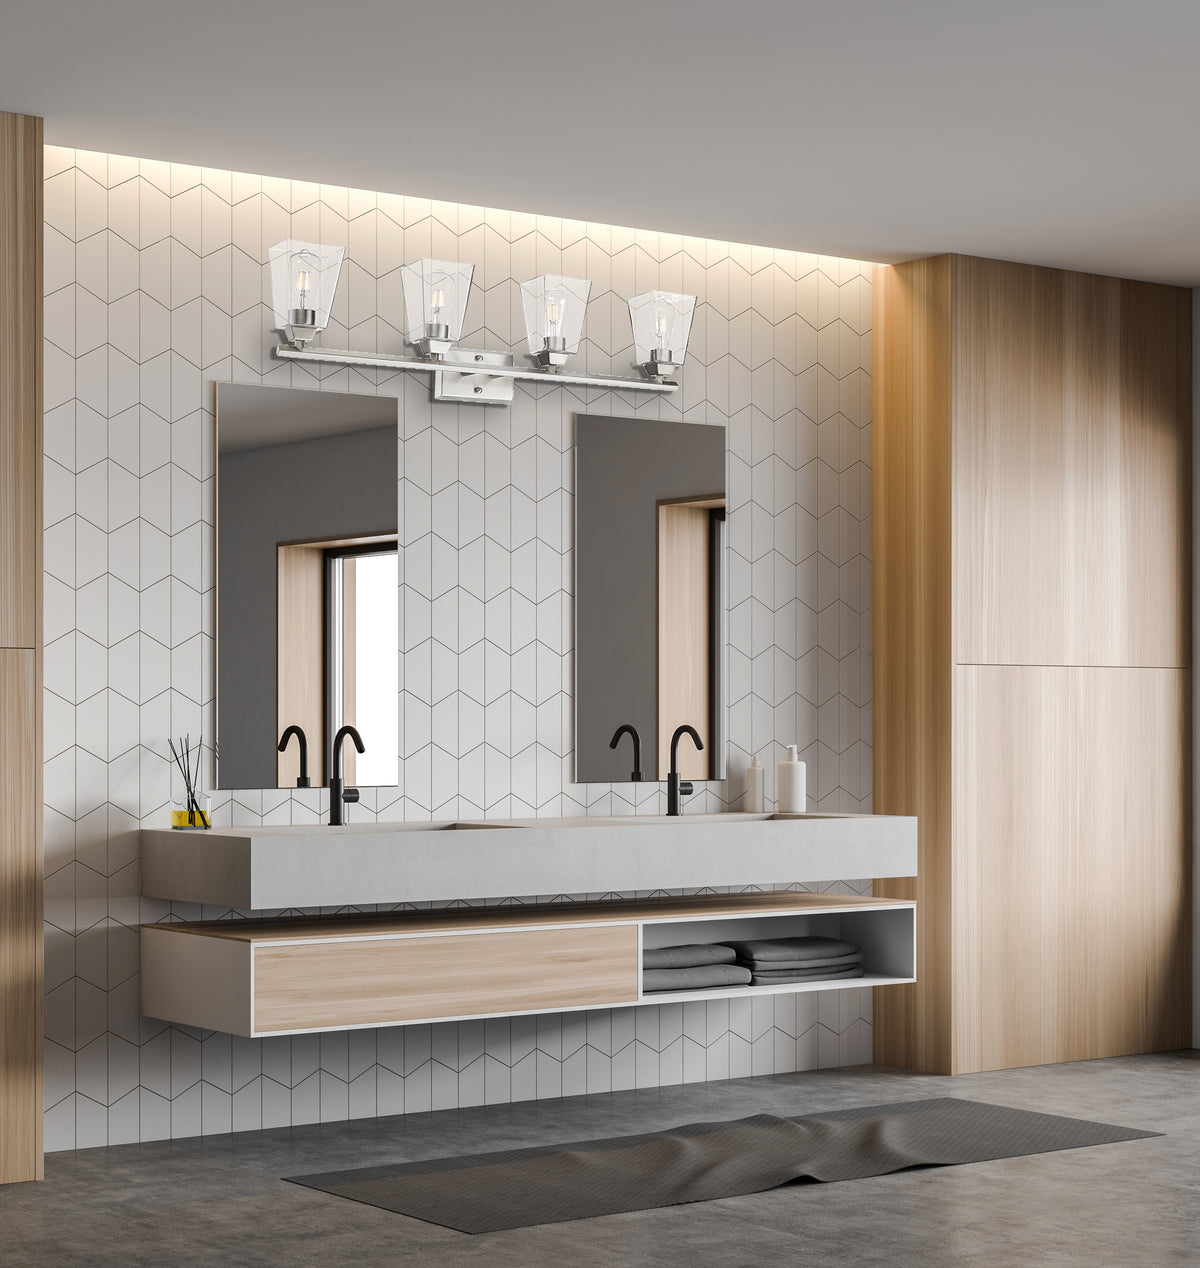 Nickel bathroom vanity light bar with 4 light over mirror